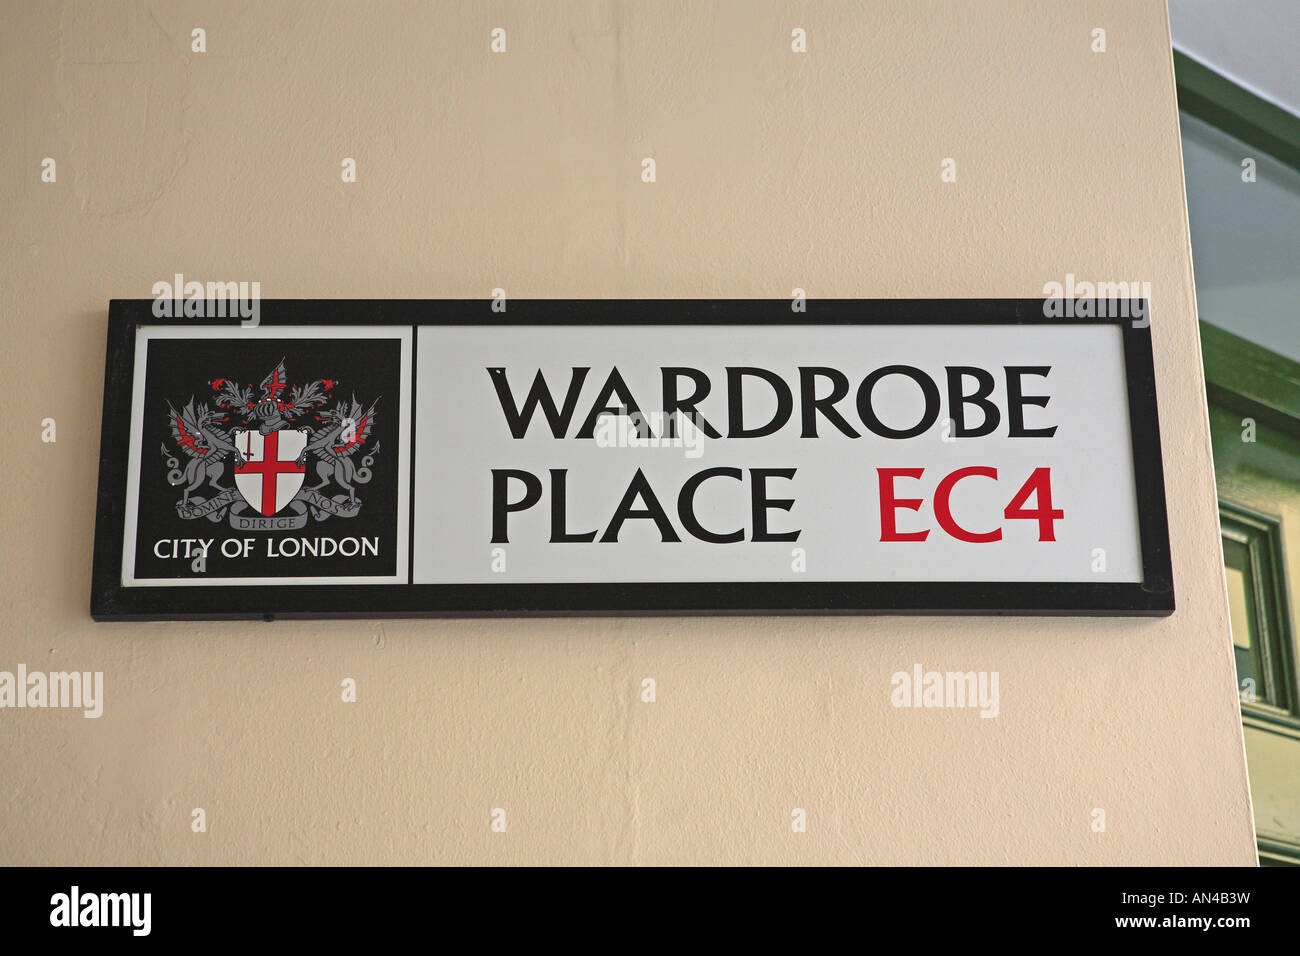 Wardrobe Place, Ec4 Stock Photo